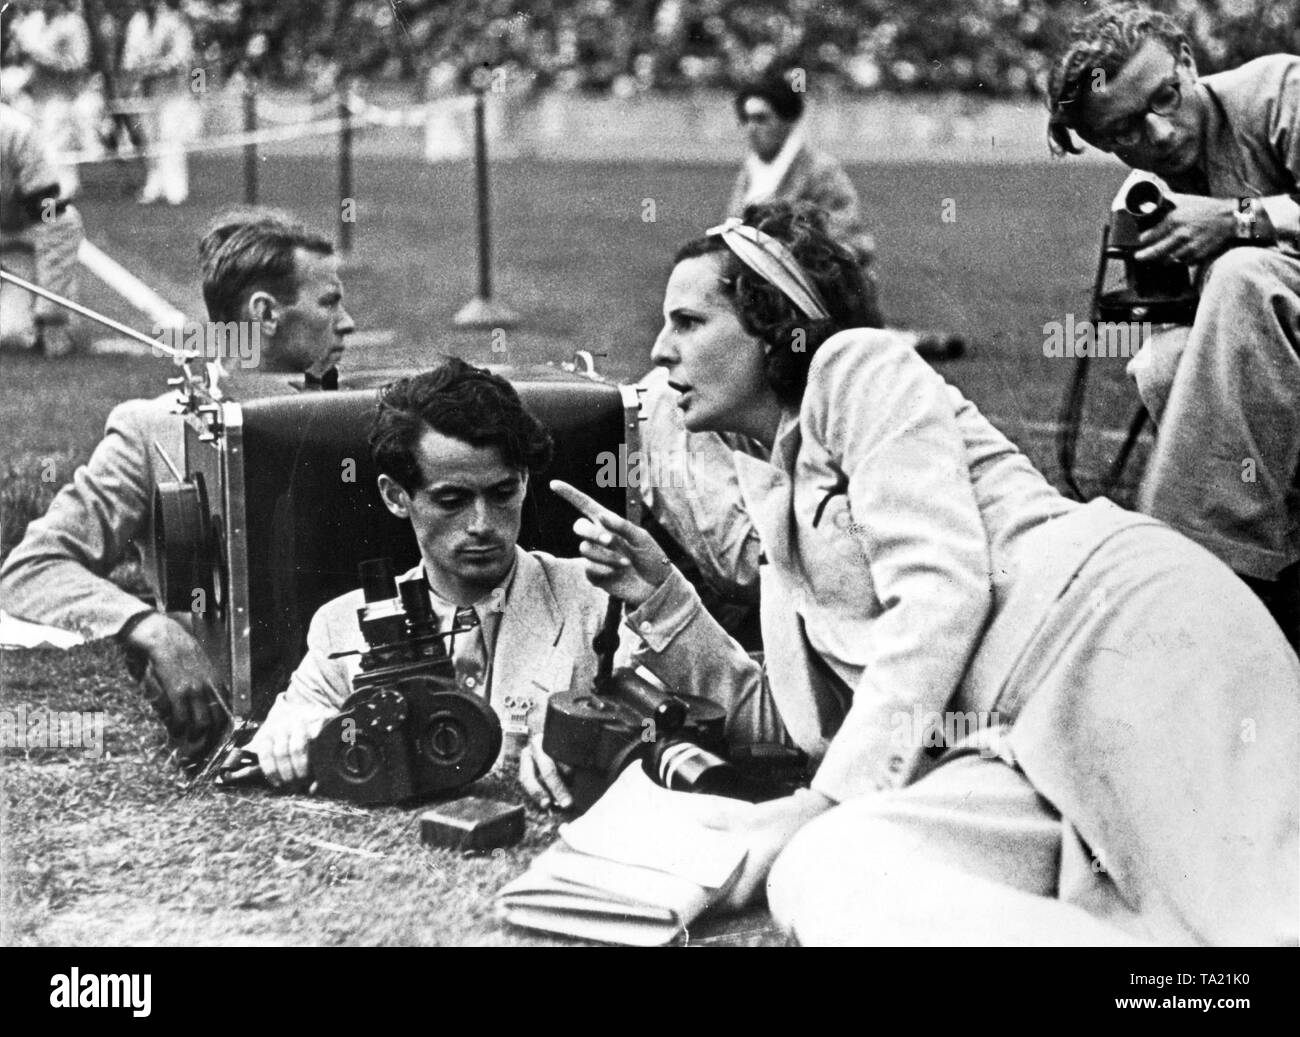 Leni Riefenstahl overlegt met cameraman in het stadion